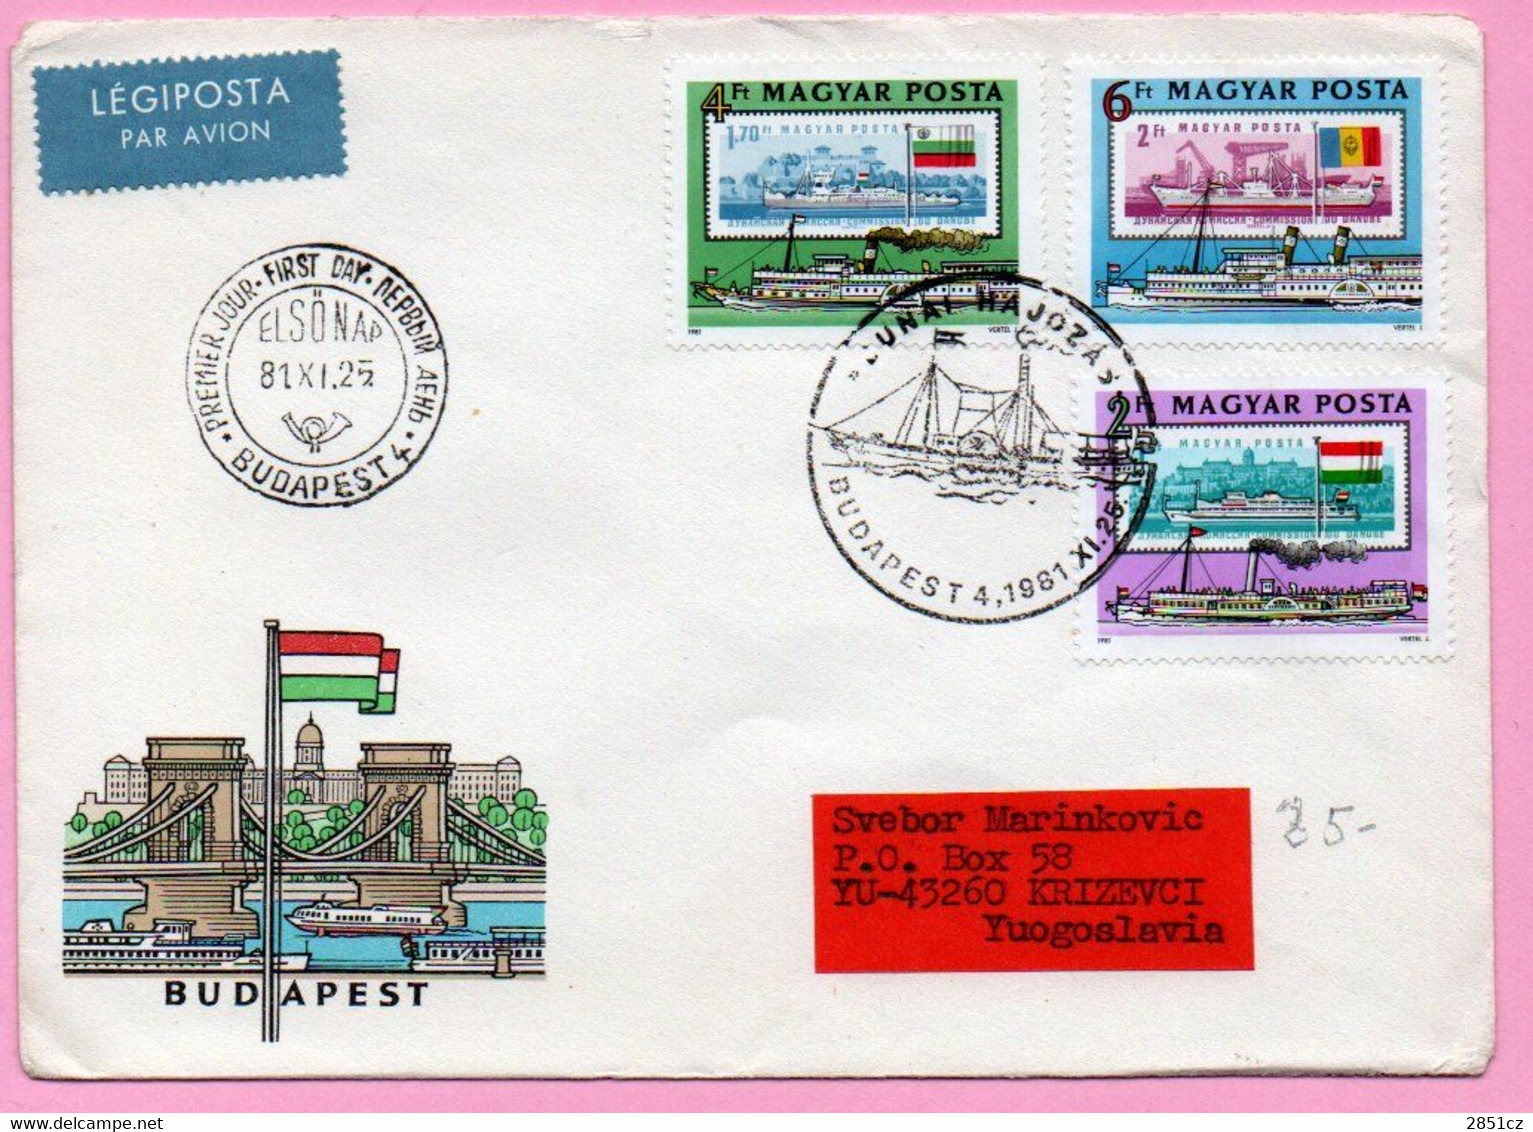 Letter - Stamp Ships / Postmark Premier Jour/First Day/Dunai Hajozas, Budapest, 1981., Hungary, Air Mail - Cartas & Documentos